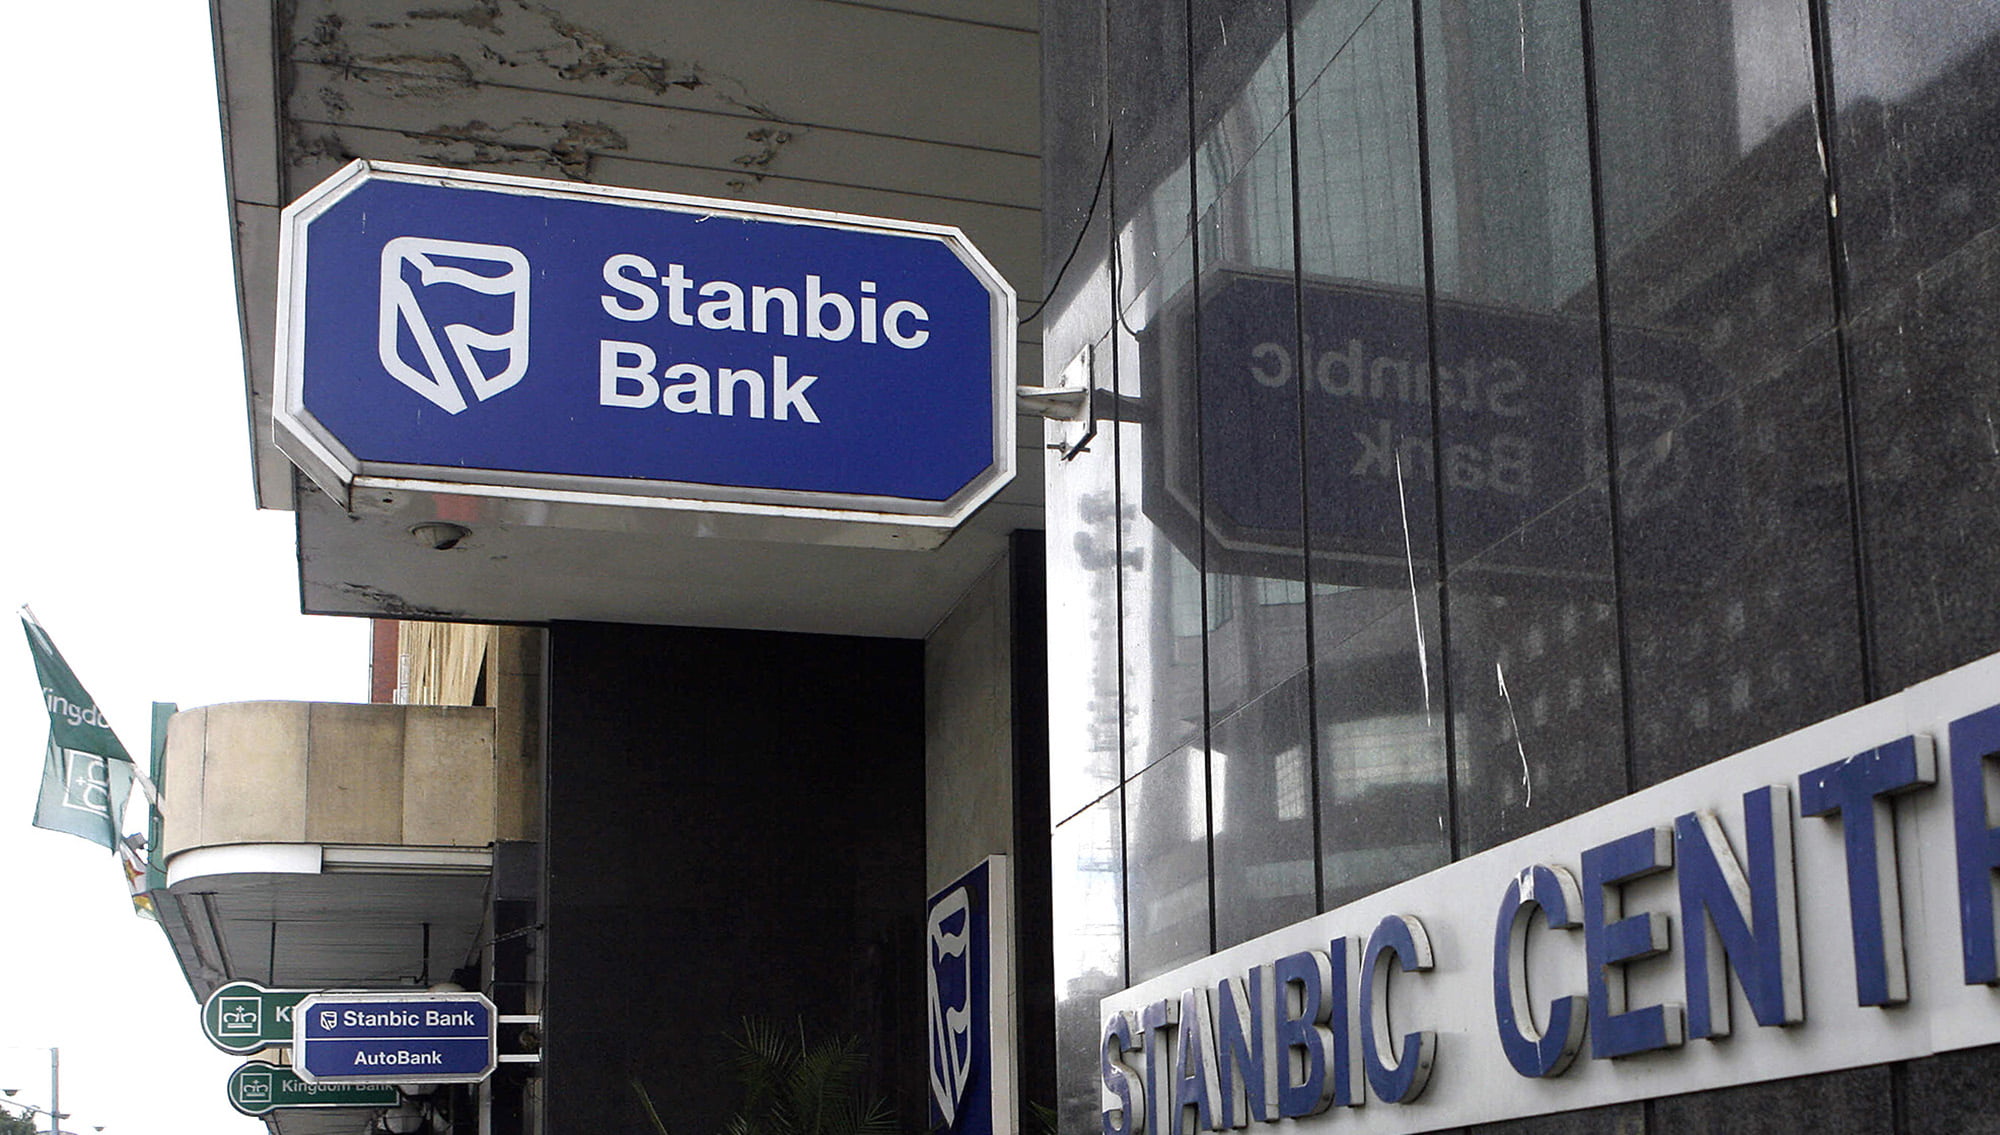 Stanbic Bank in Zimbabwe